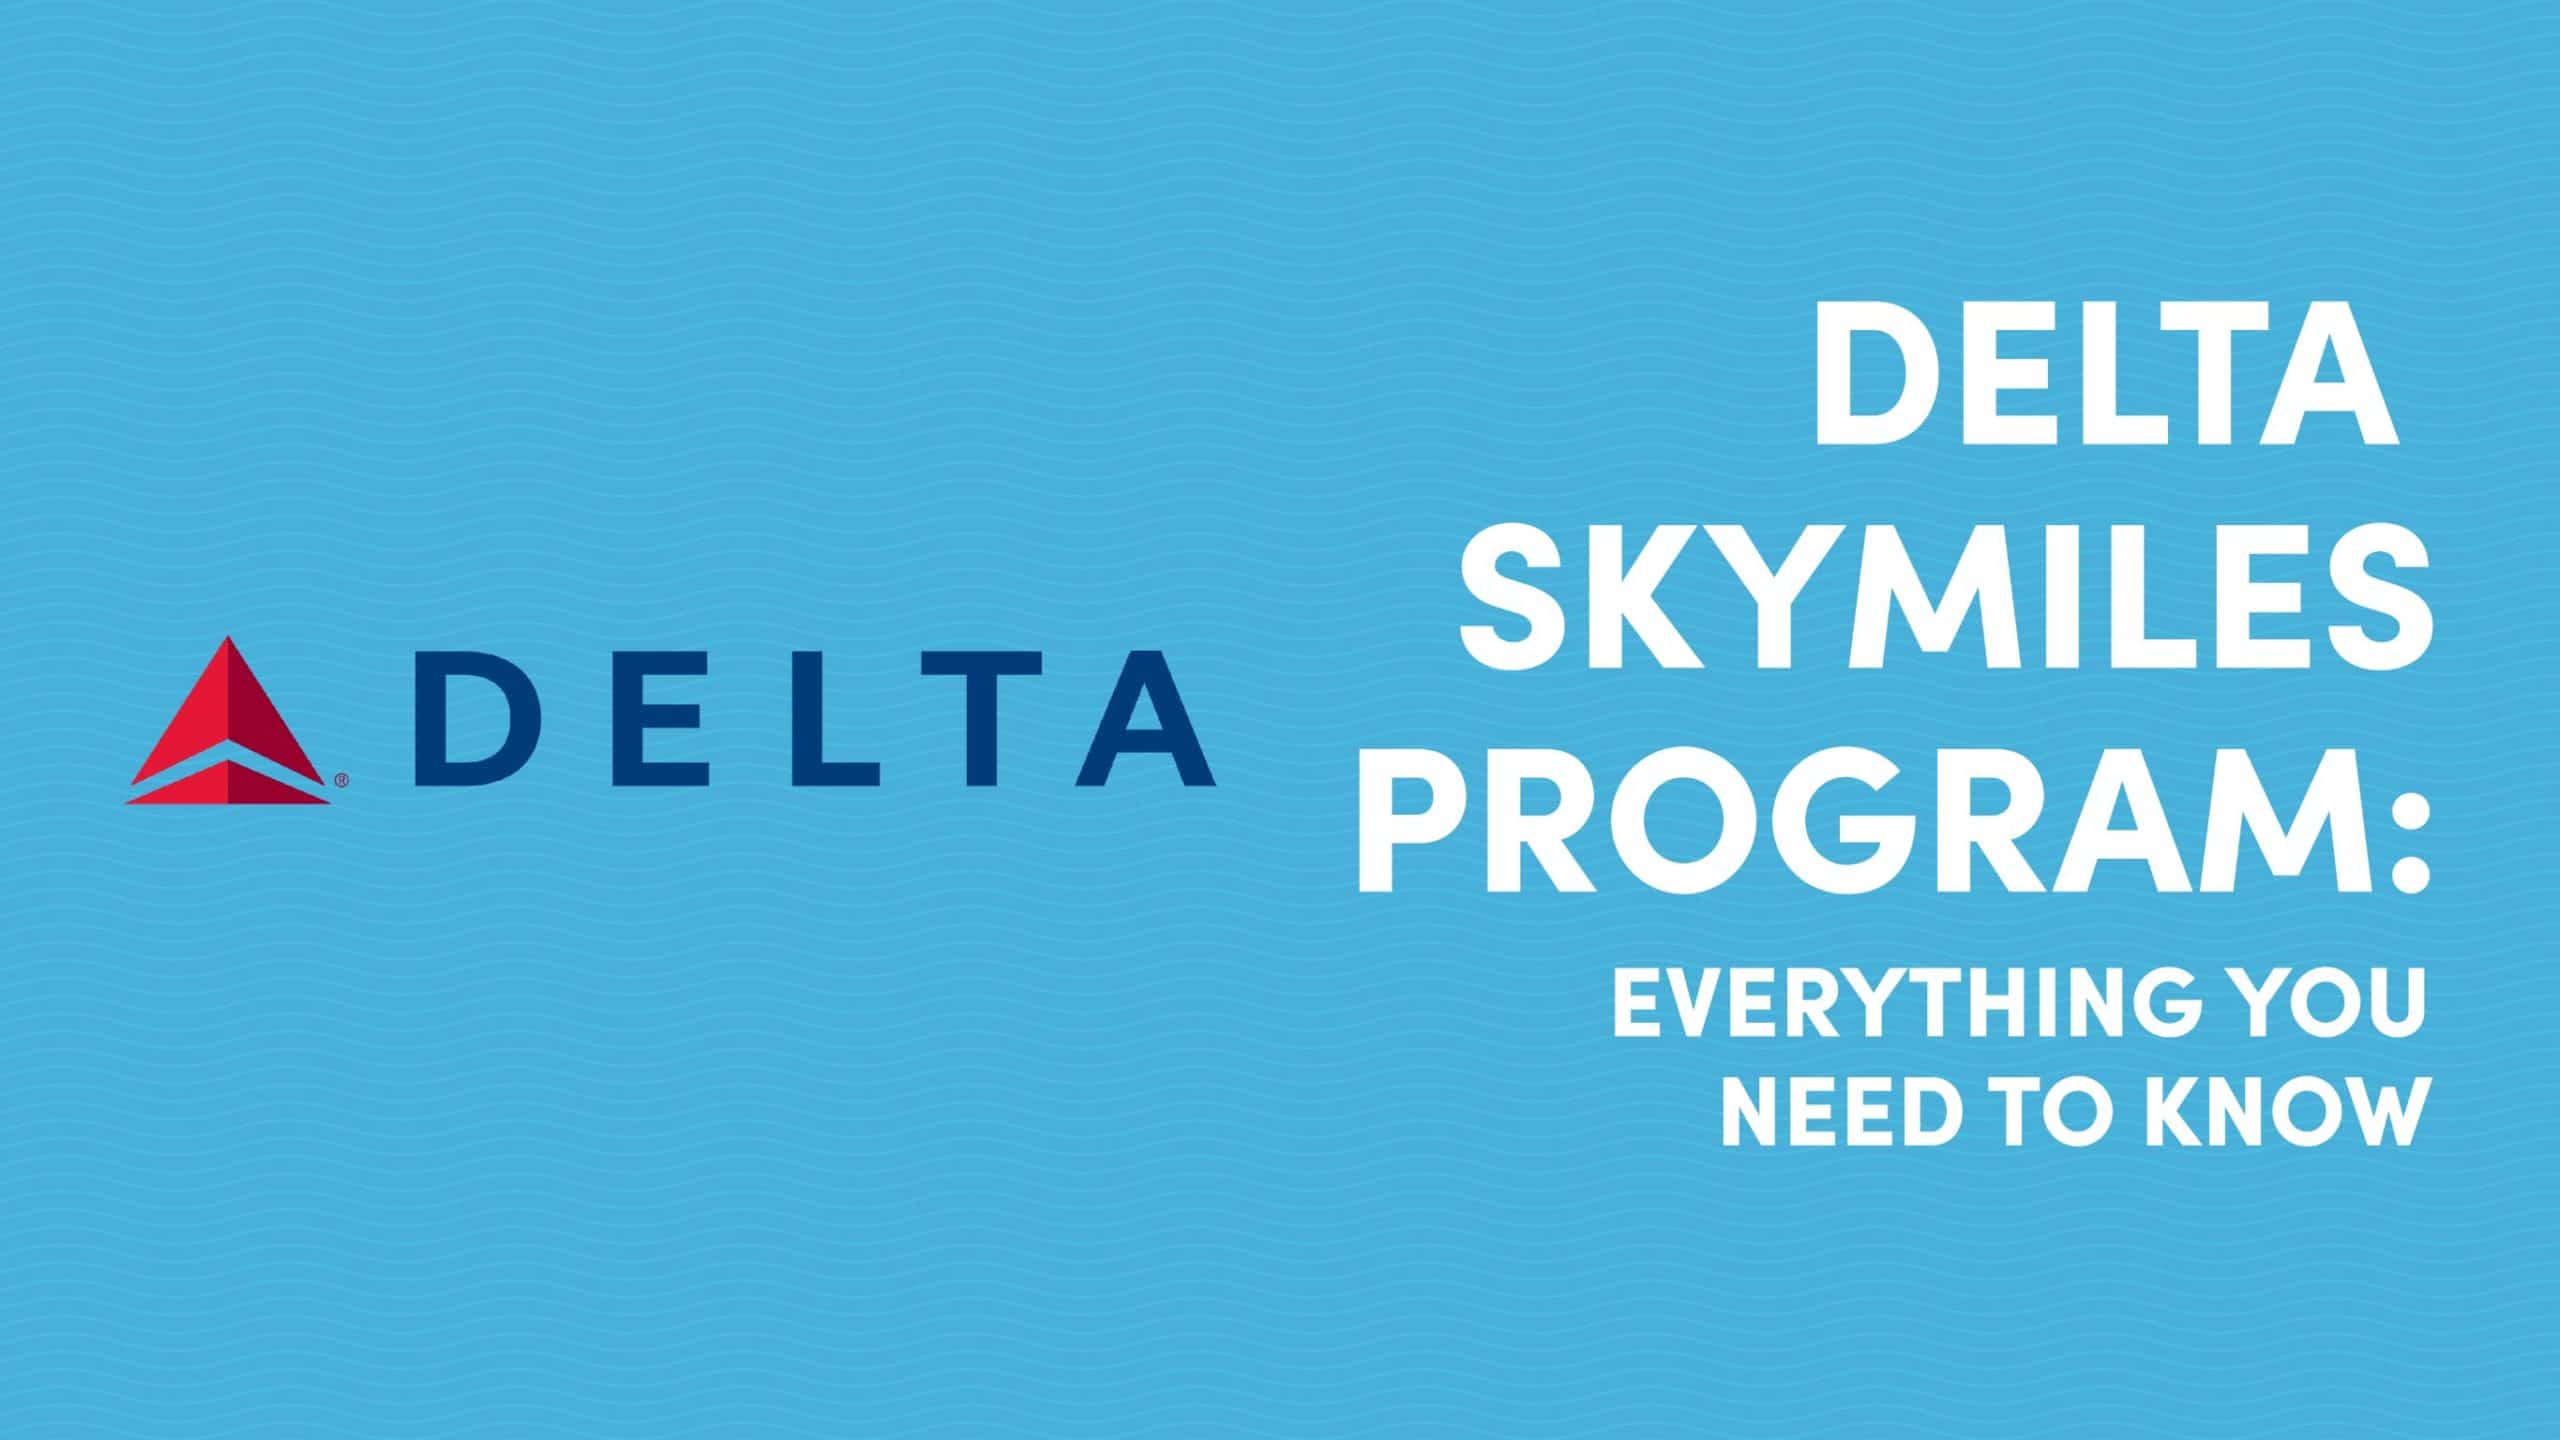 delta airlines skymiles login